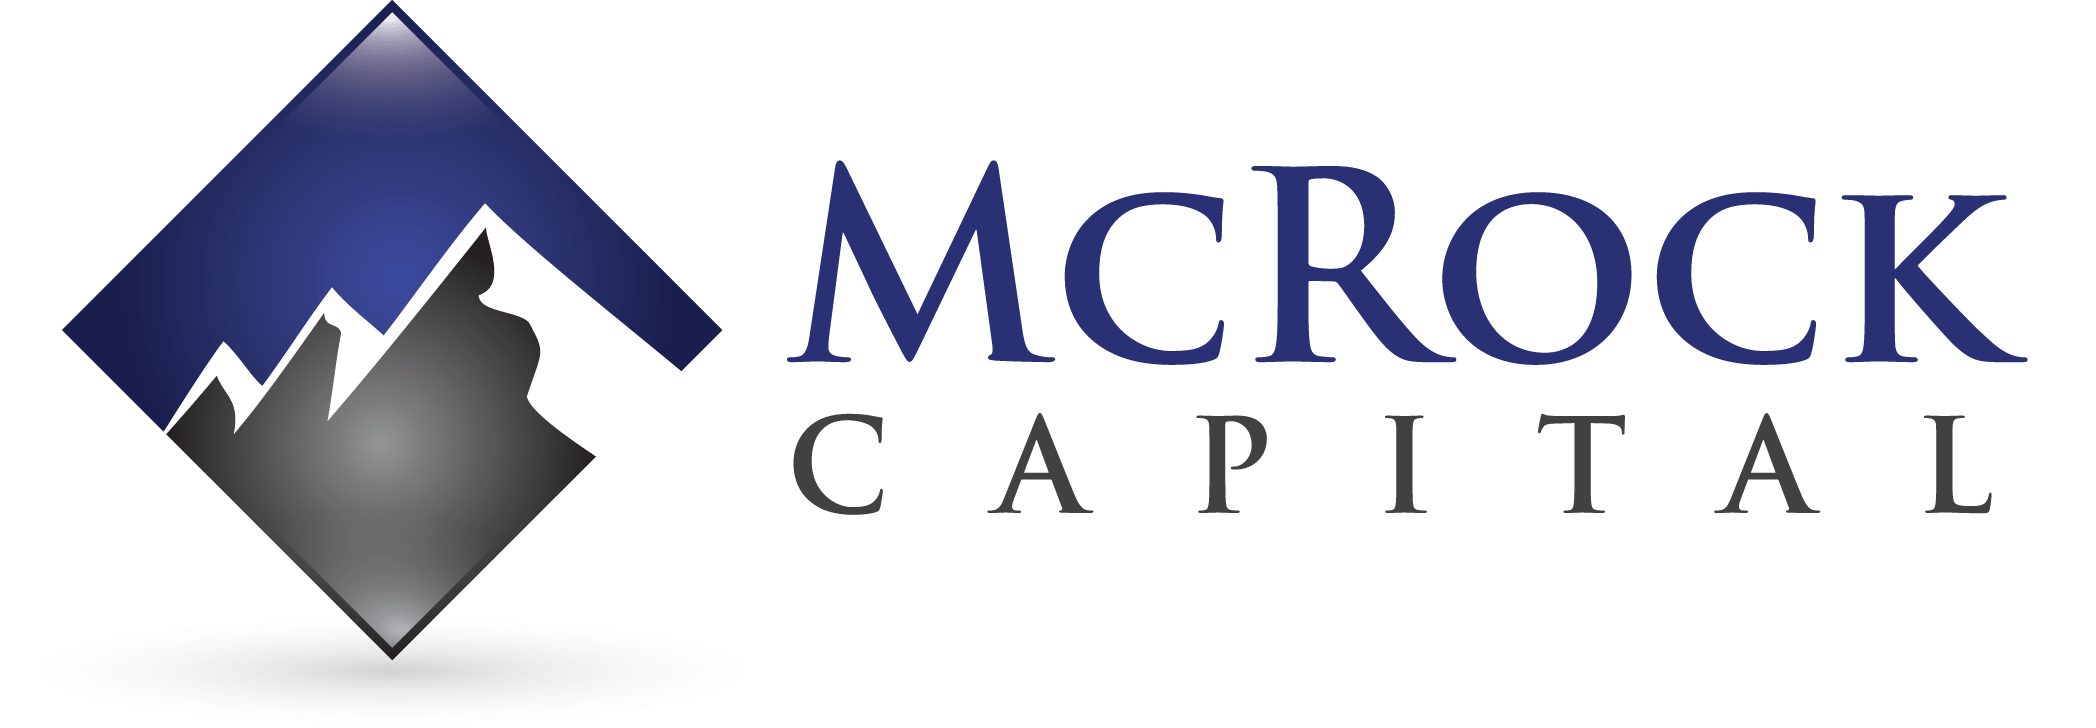 `McRock Capital Fund I and II blue logo`